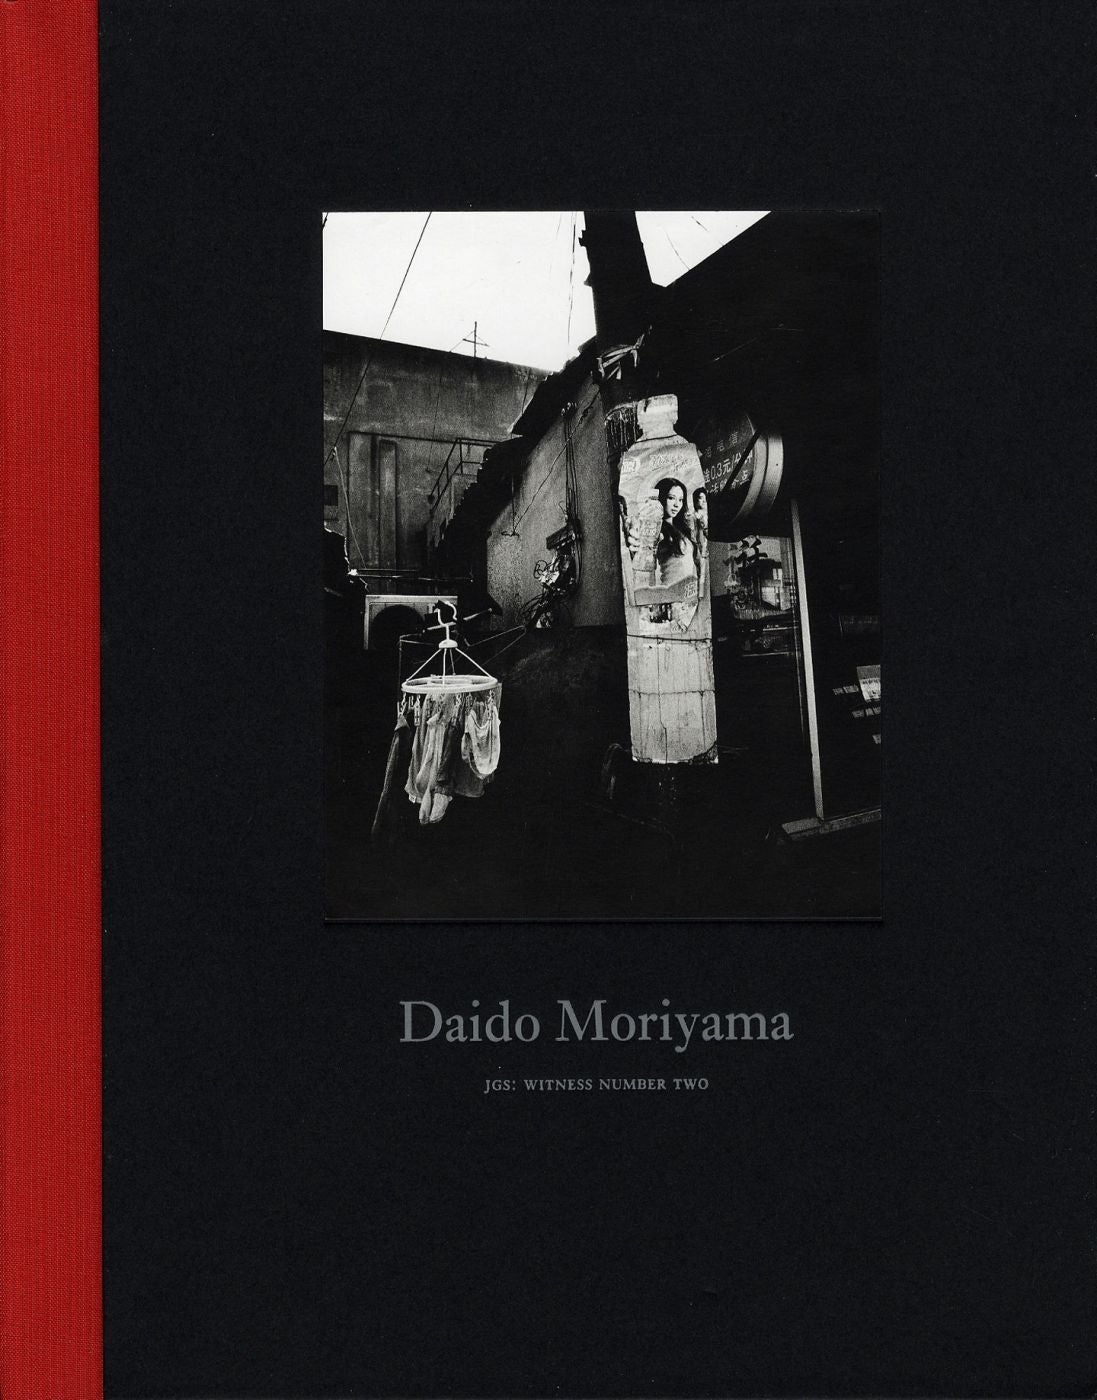 Witness #2 (Number Two): Daido Moriyama